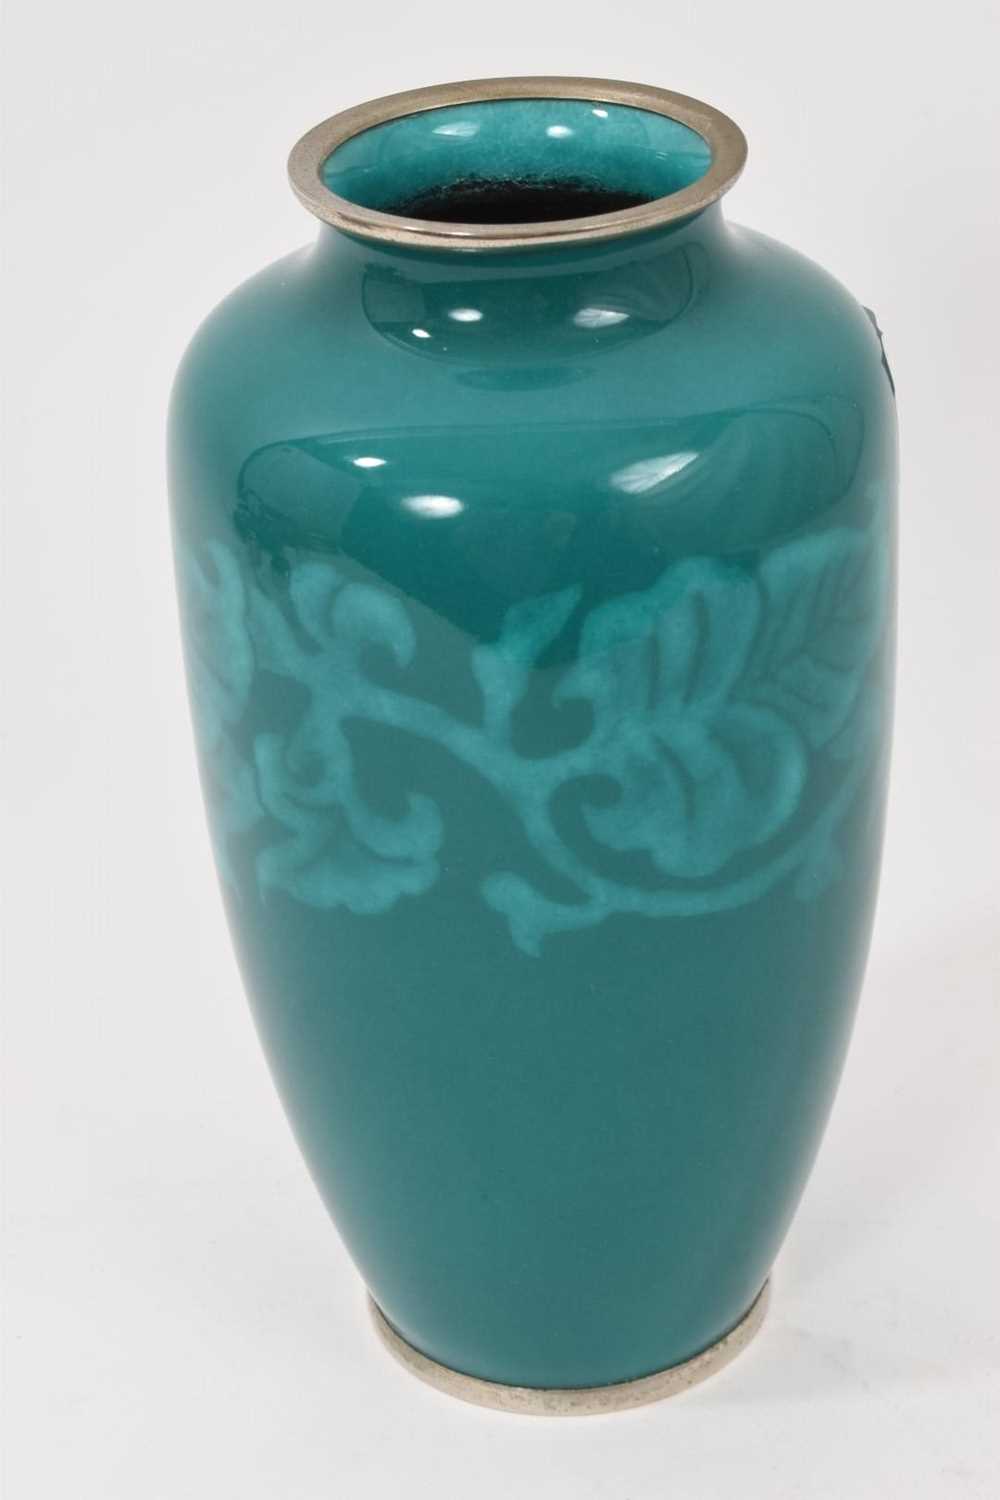 Japanese enamel green ground vase stamped Sato - Image 2 of 4